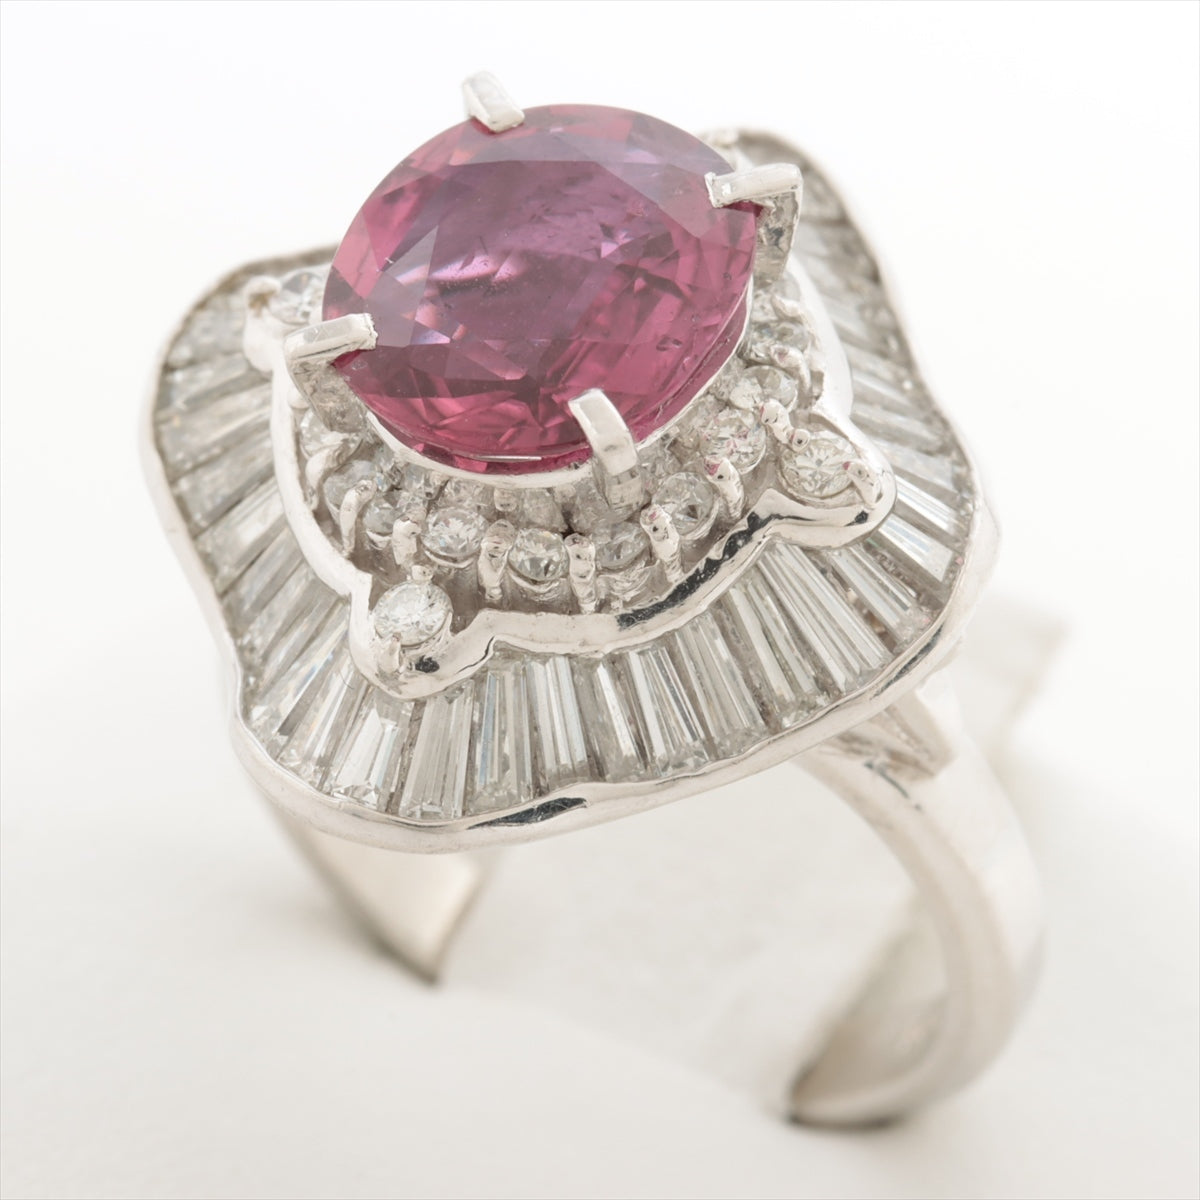 Pink sapphire Diamond Ring Pt900 12.4g R2.256 D1.59